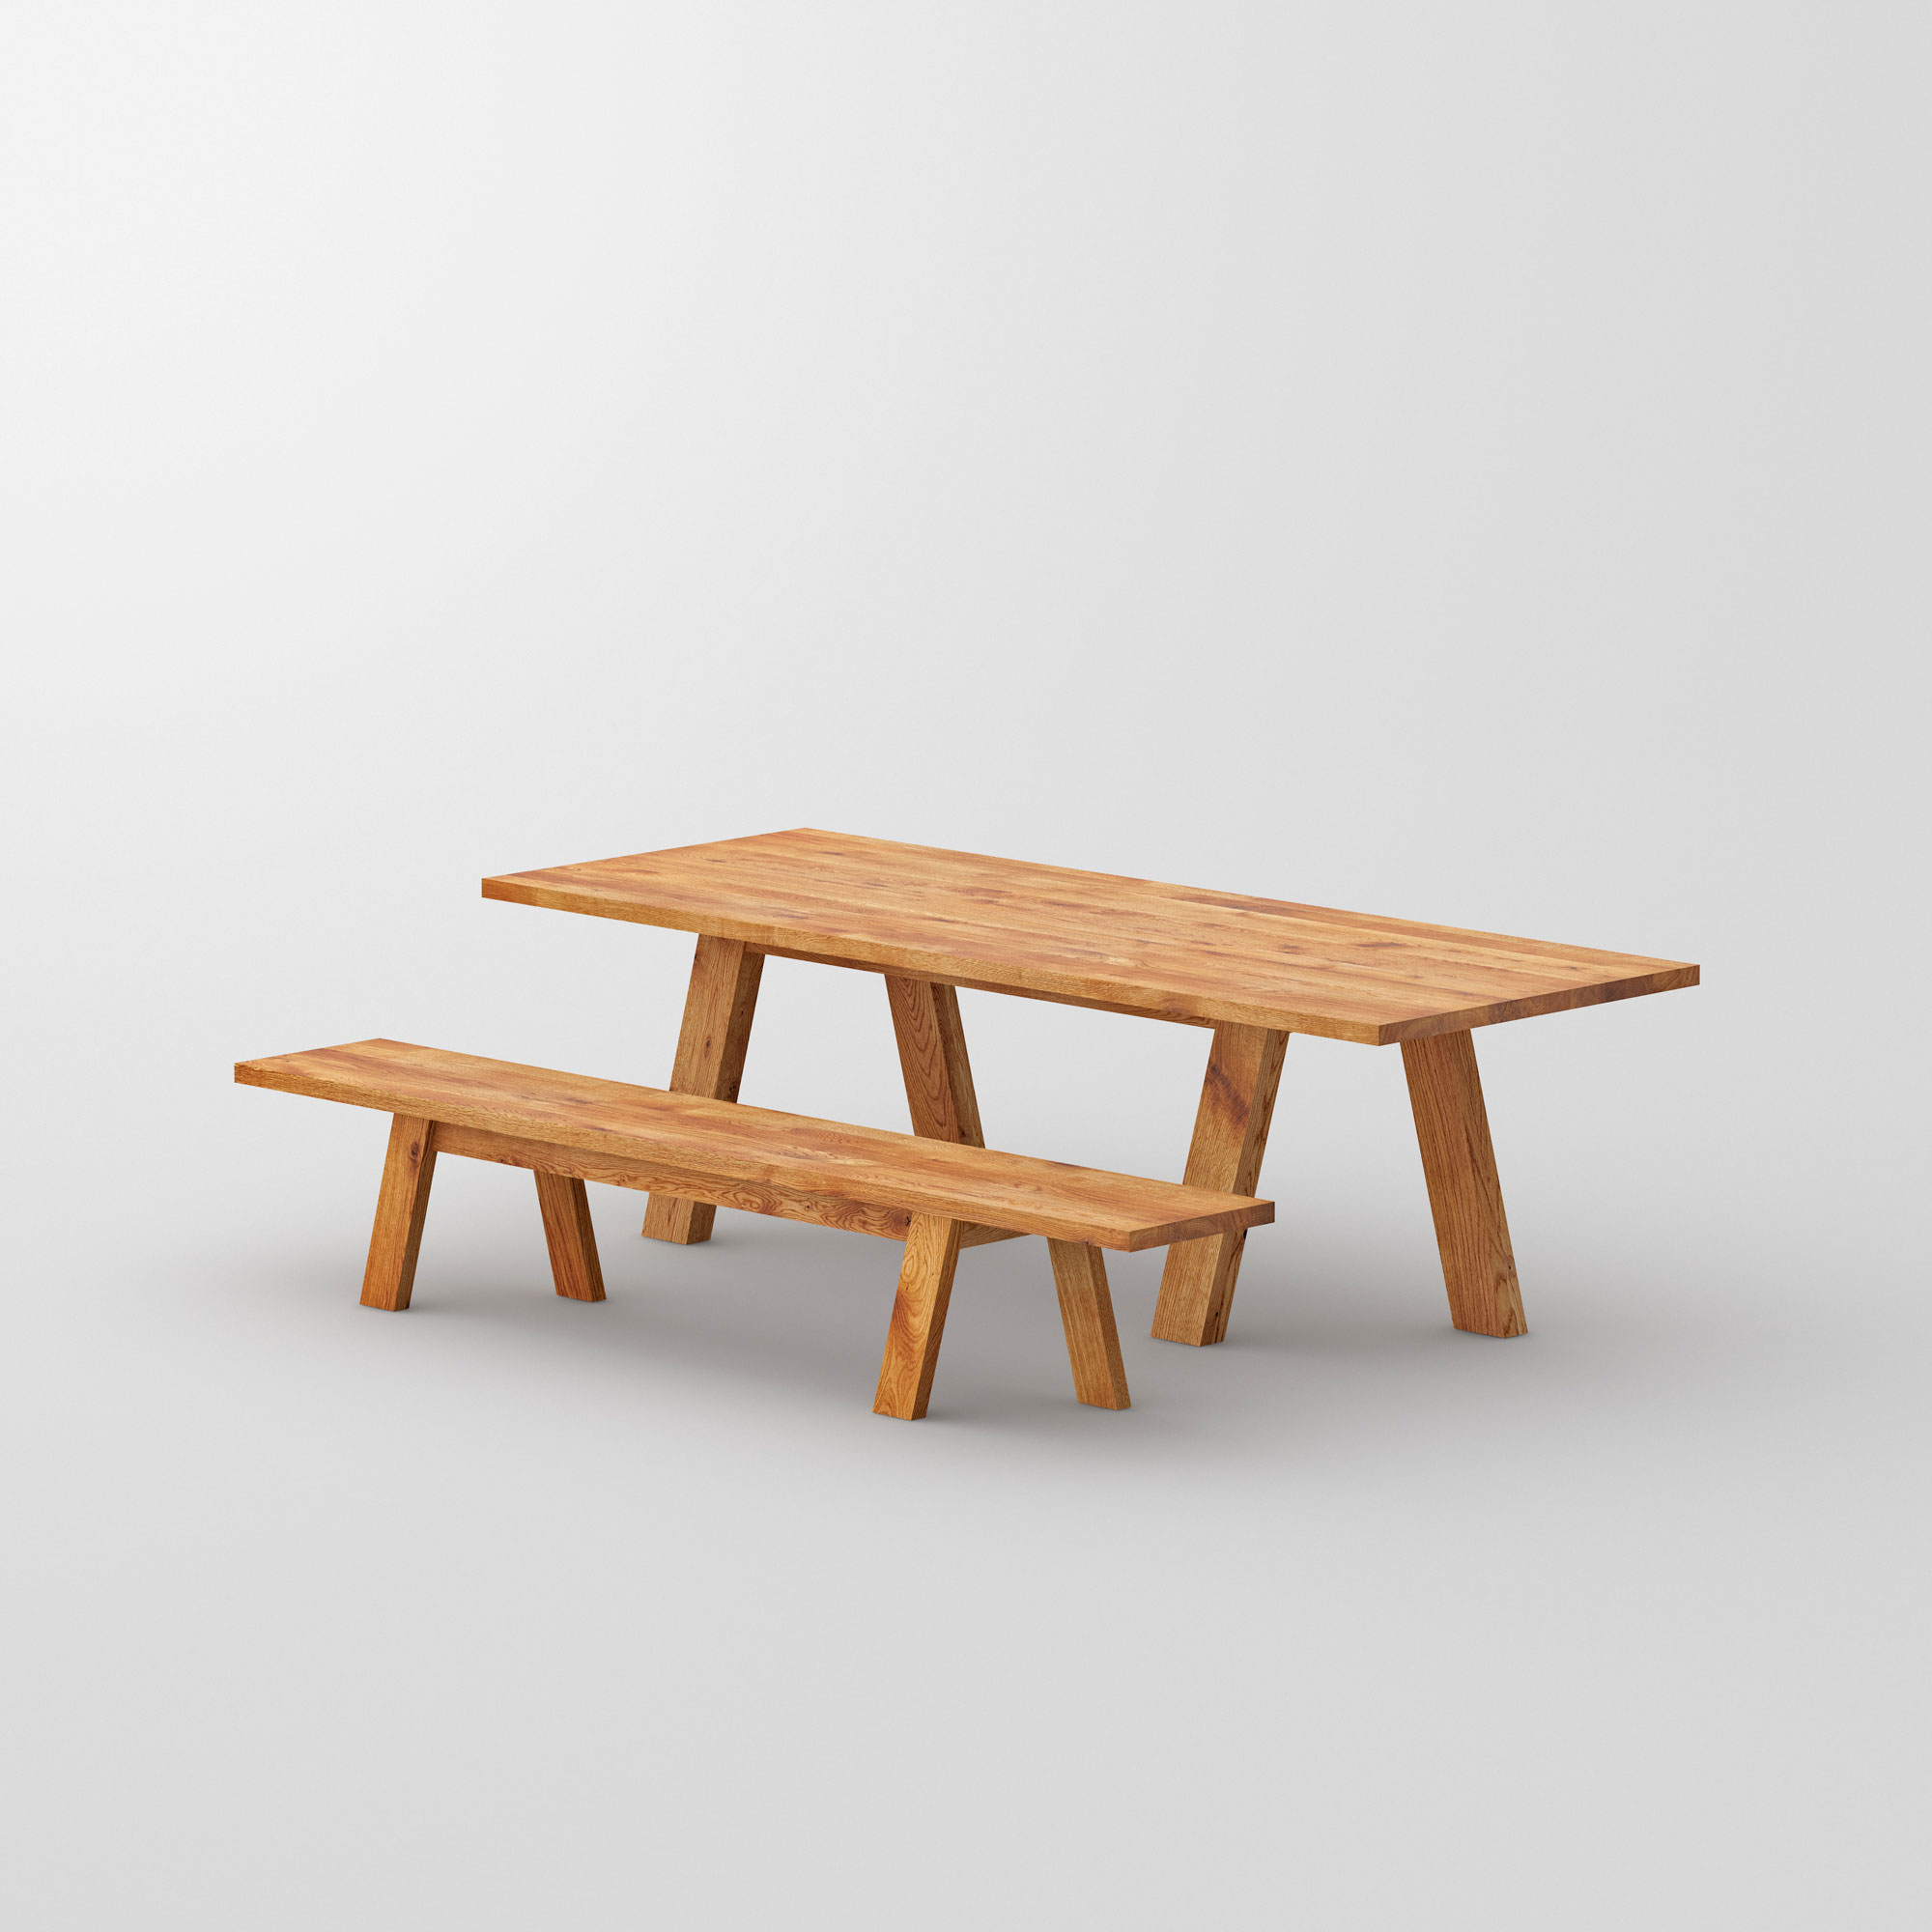 Unique Designer Table GO cam1 custom made in solid wood by vitamin design